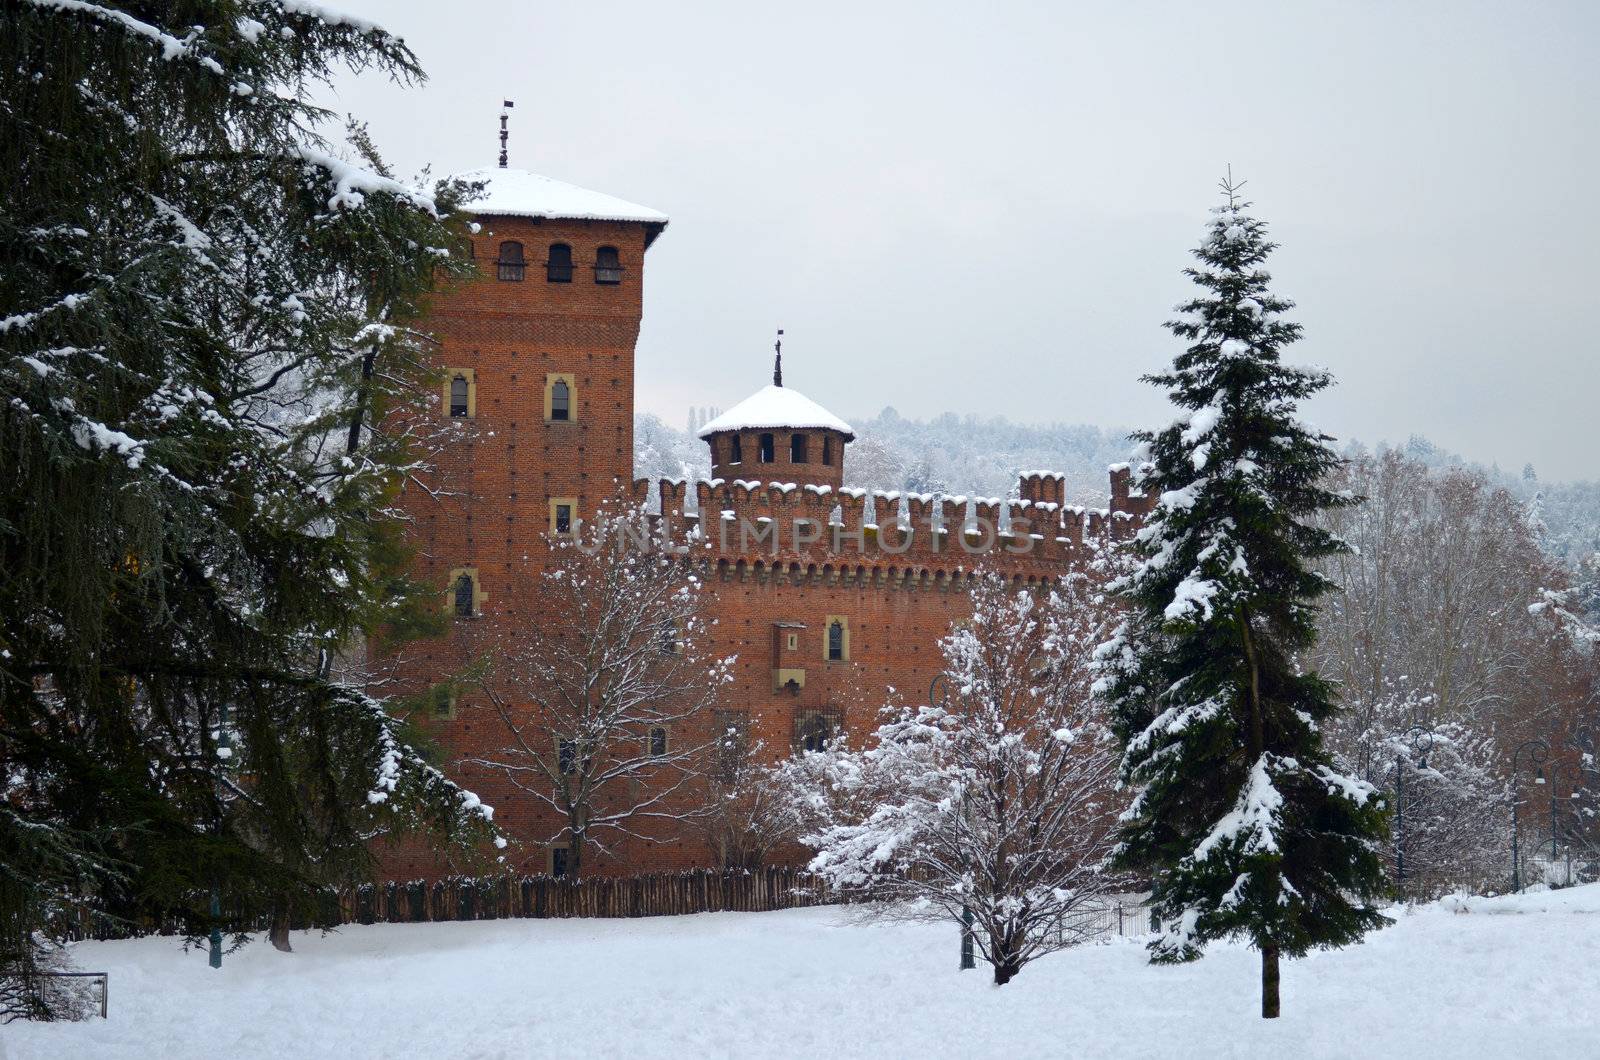 Medieval castle in Valentino Park, Turin by artofphoto